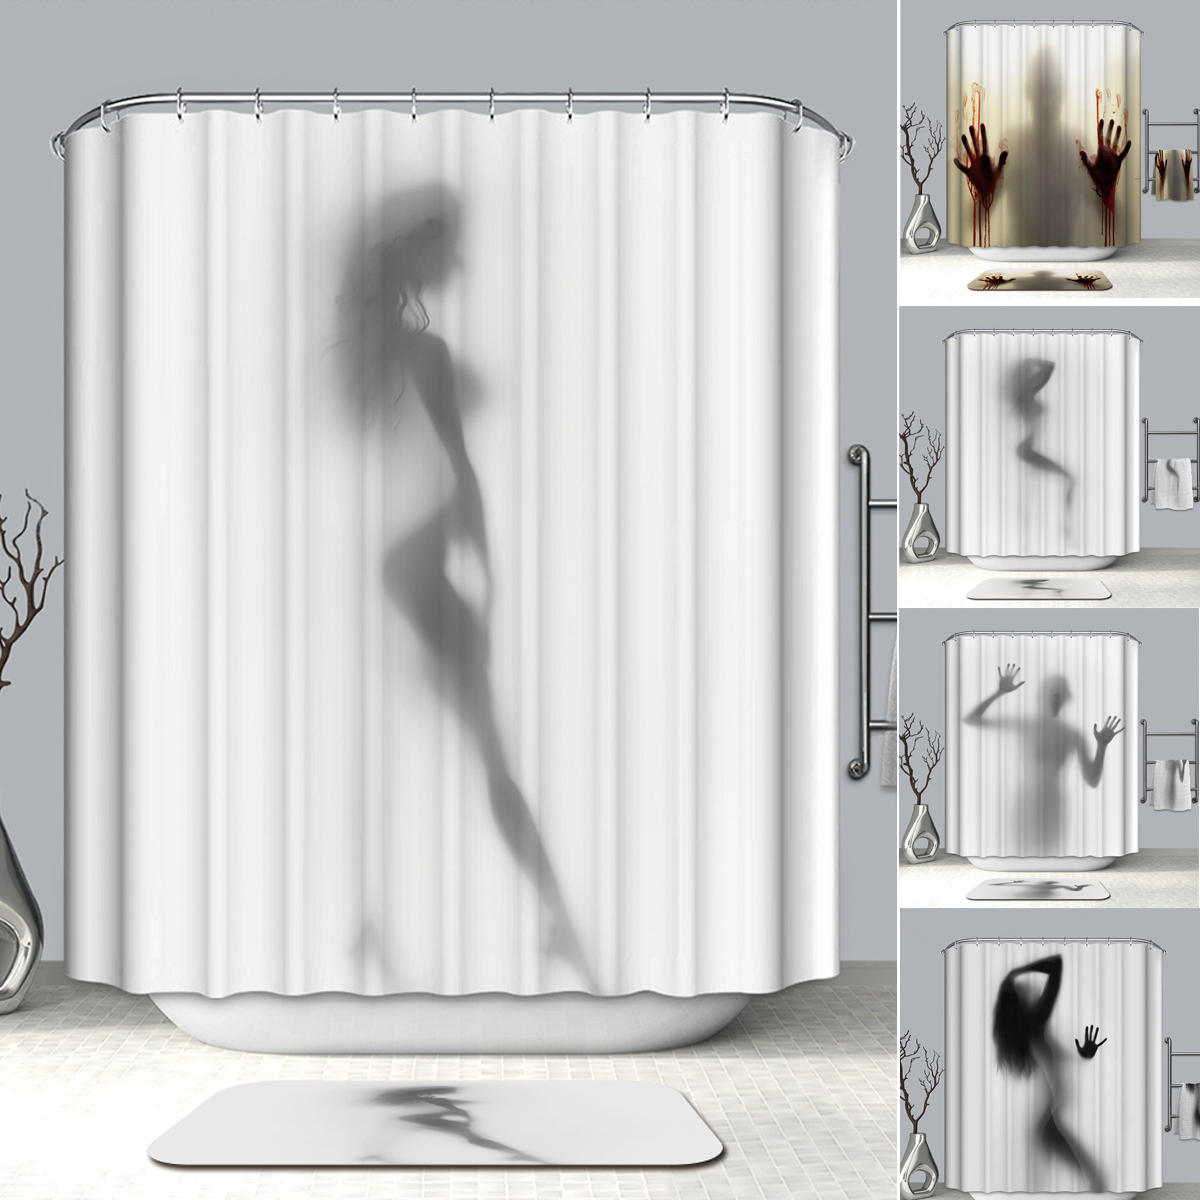 Waterproof Shower Curtain &12 Hooks DIY Bathroom Decor Scary Horror 3D Halloween